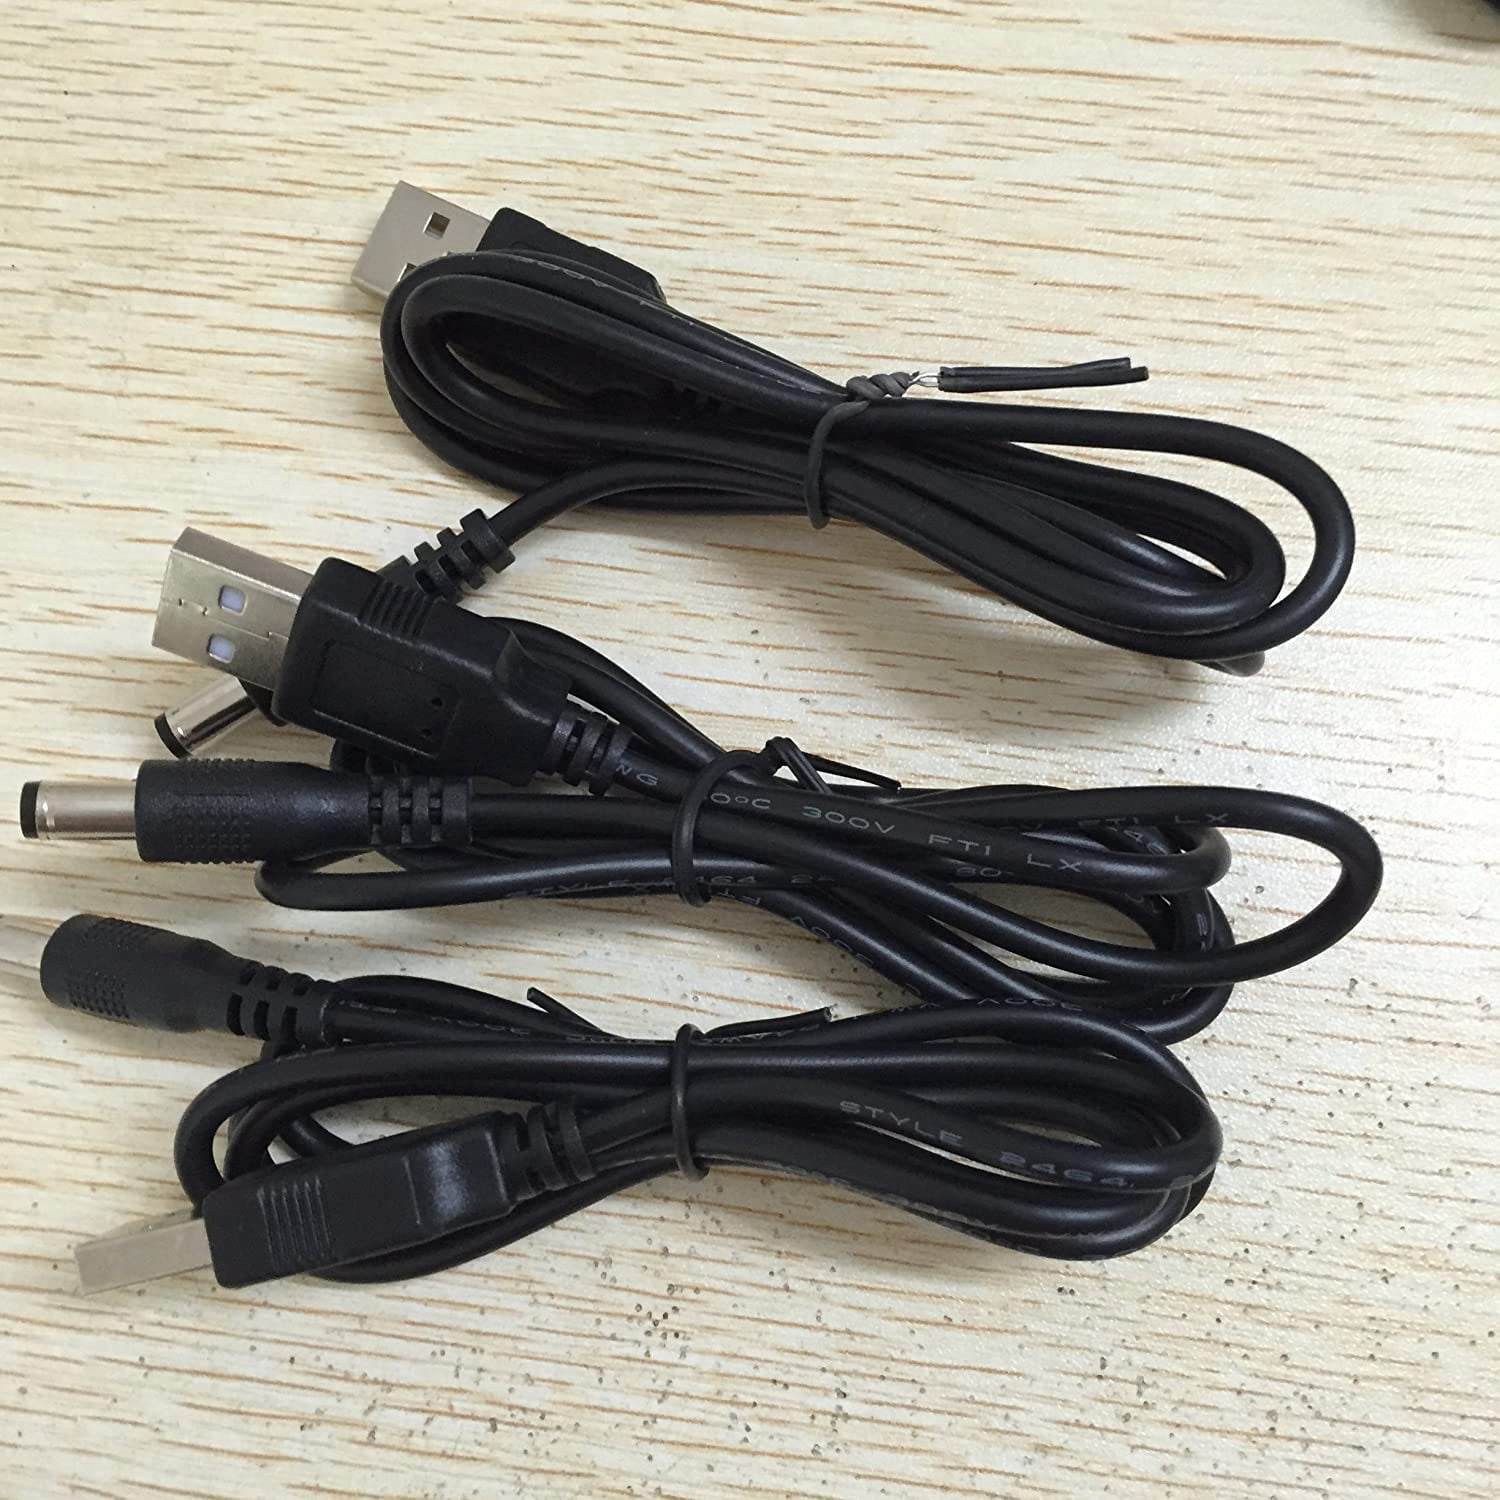 DZYDZR 3pcs USB to 2.5mm Charging Cord